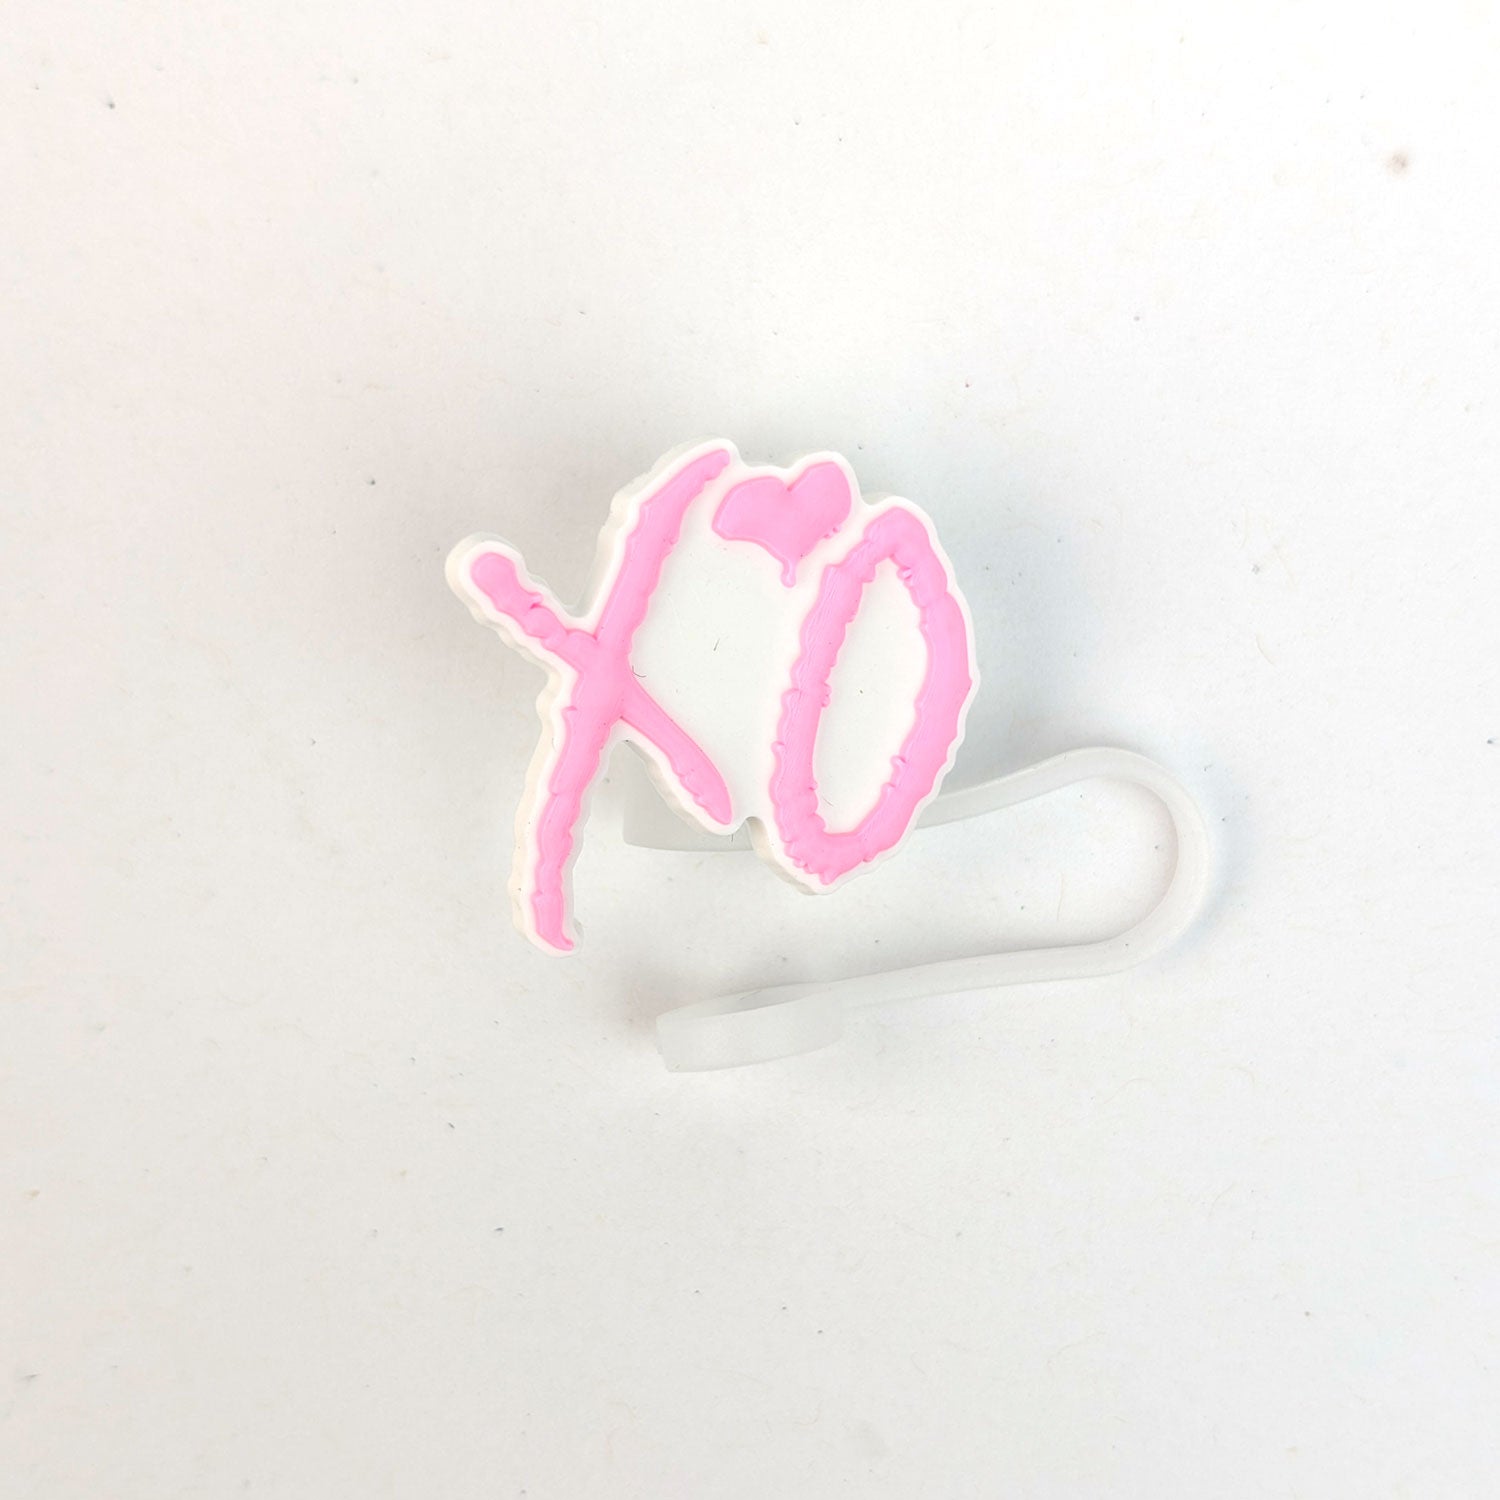 XO' Hug and Kiss Design Straw Cover Wholesale